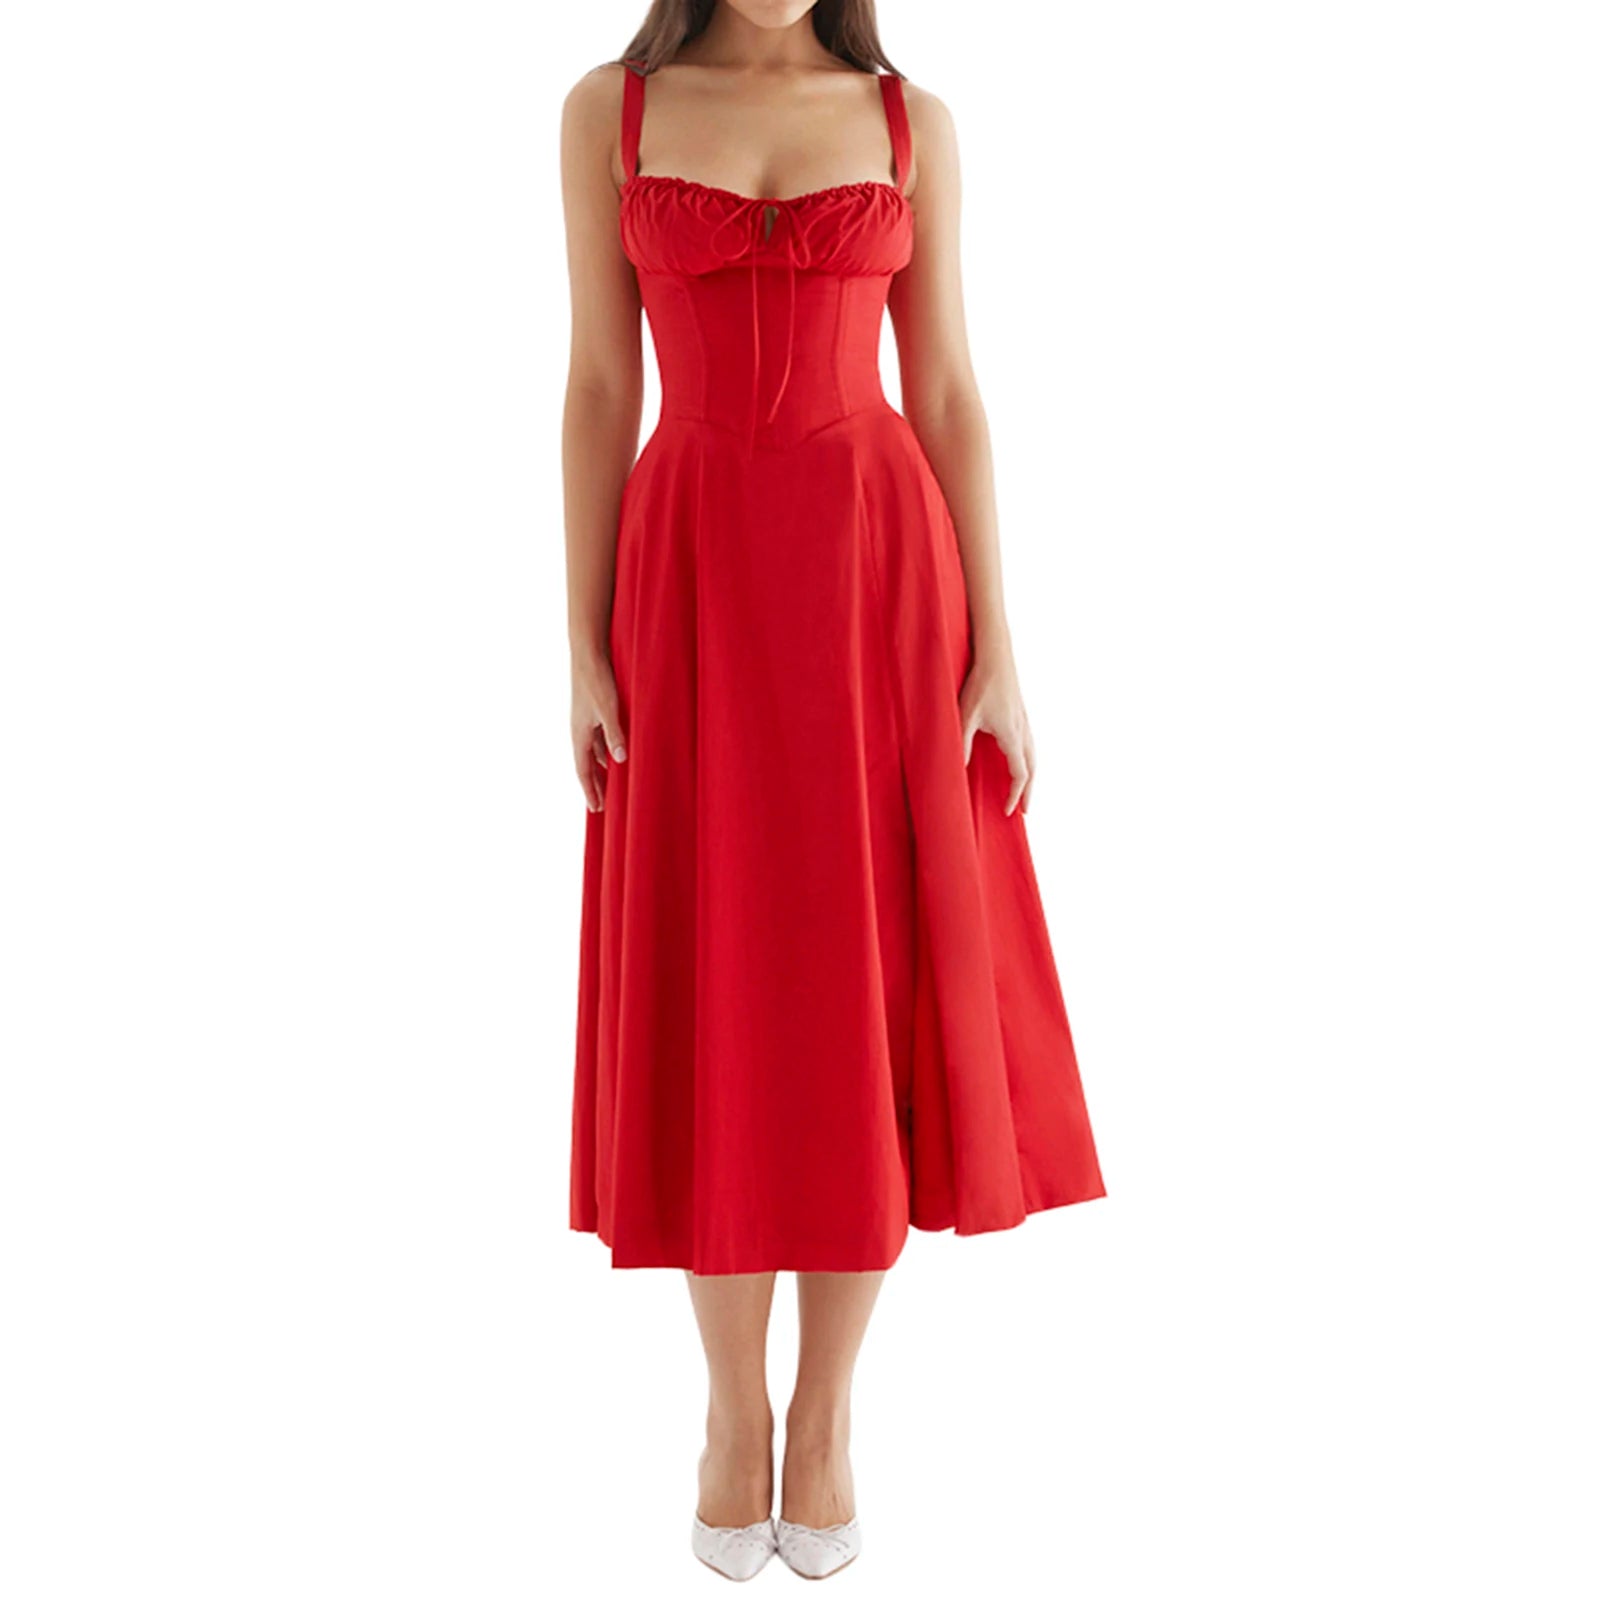 VastiVogue Women's Solid Sleeveless Summer Dress VestiVogue Red M